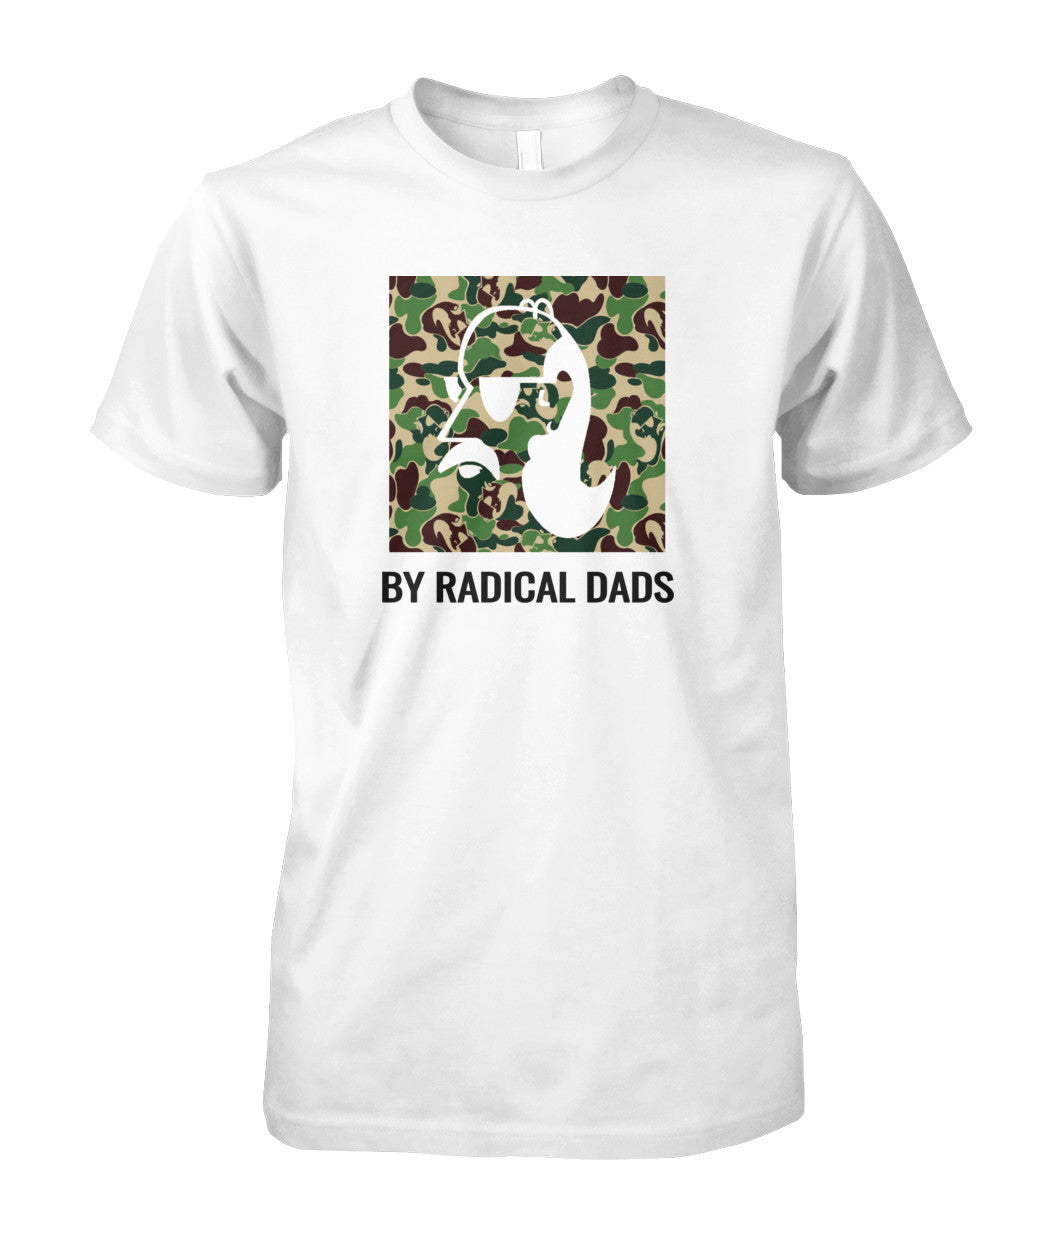 A Radical Dad (R) #1 tee